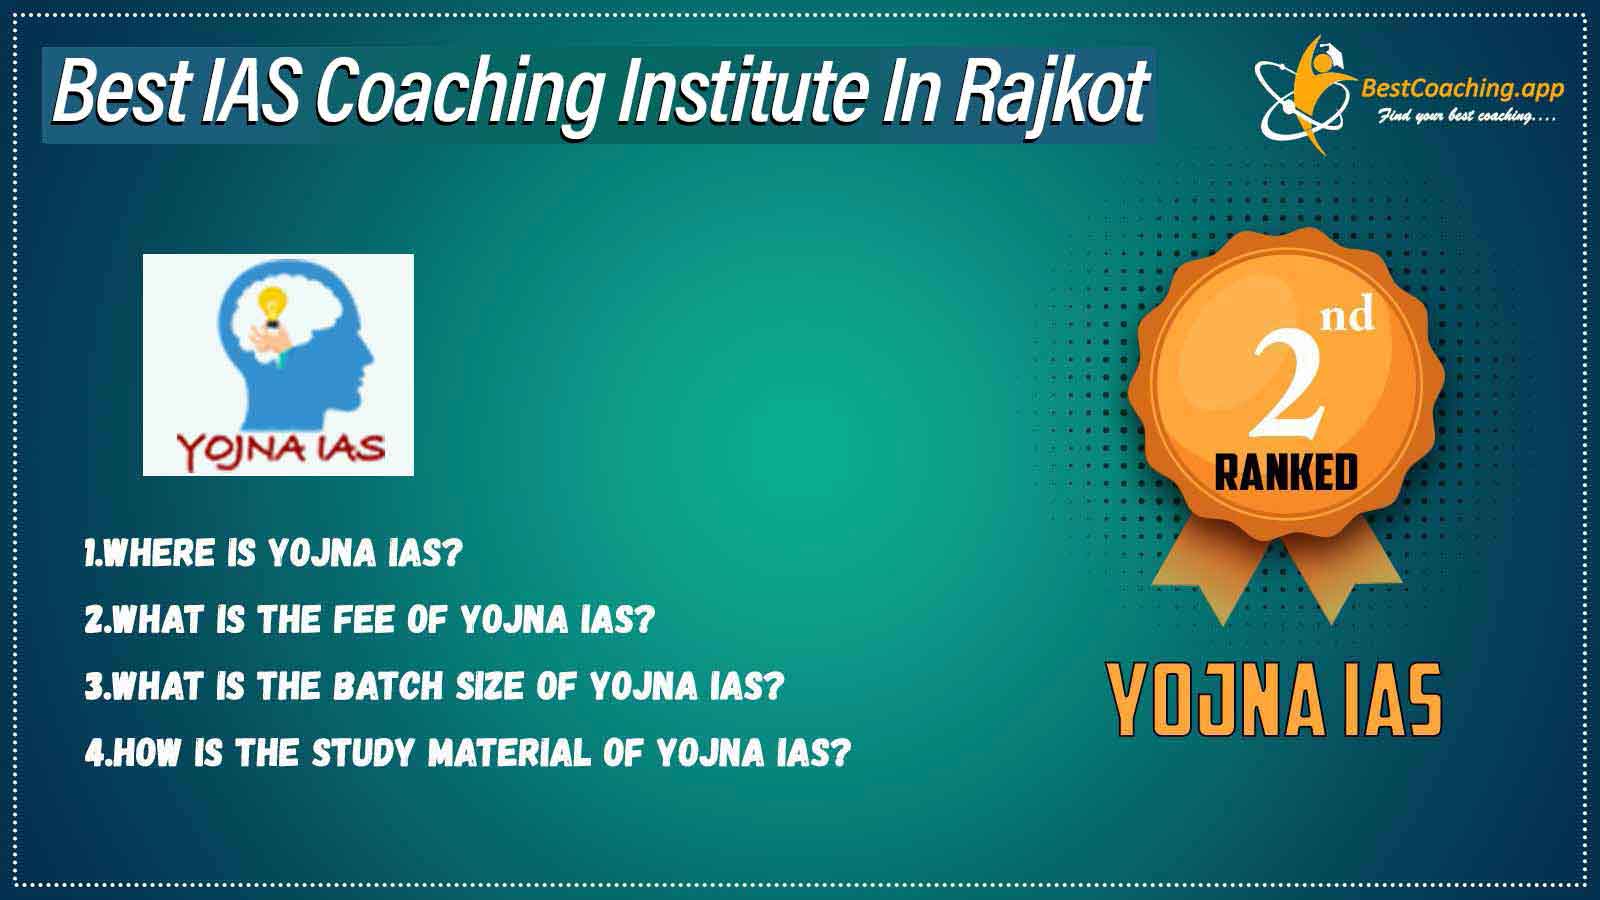 Rank 2 Best IAS Coaching in Rajkot